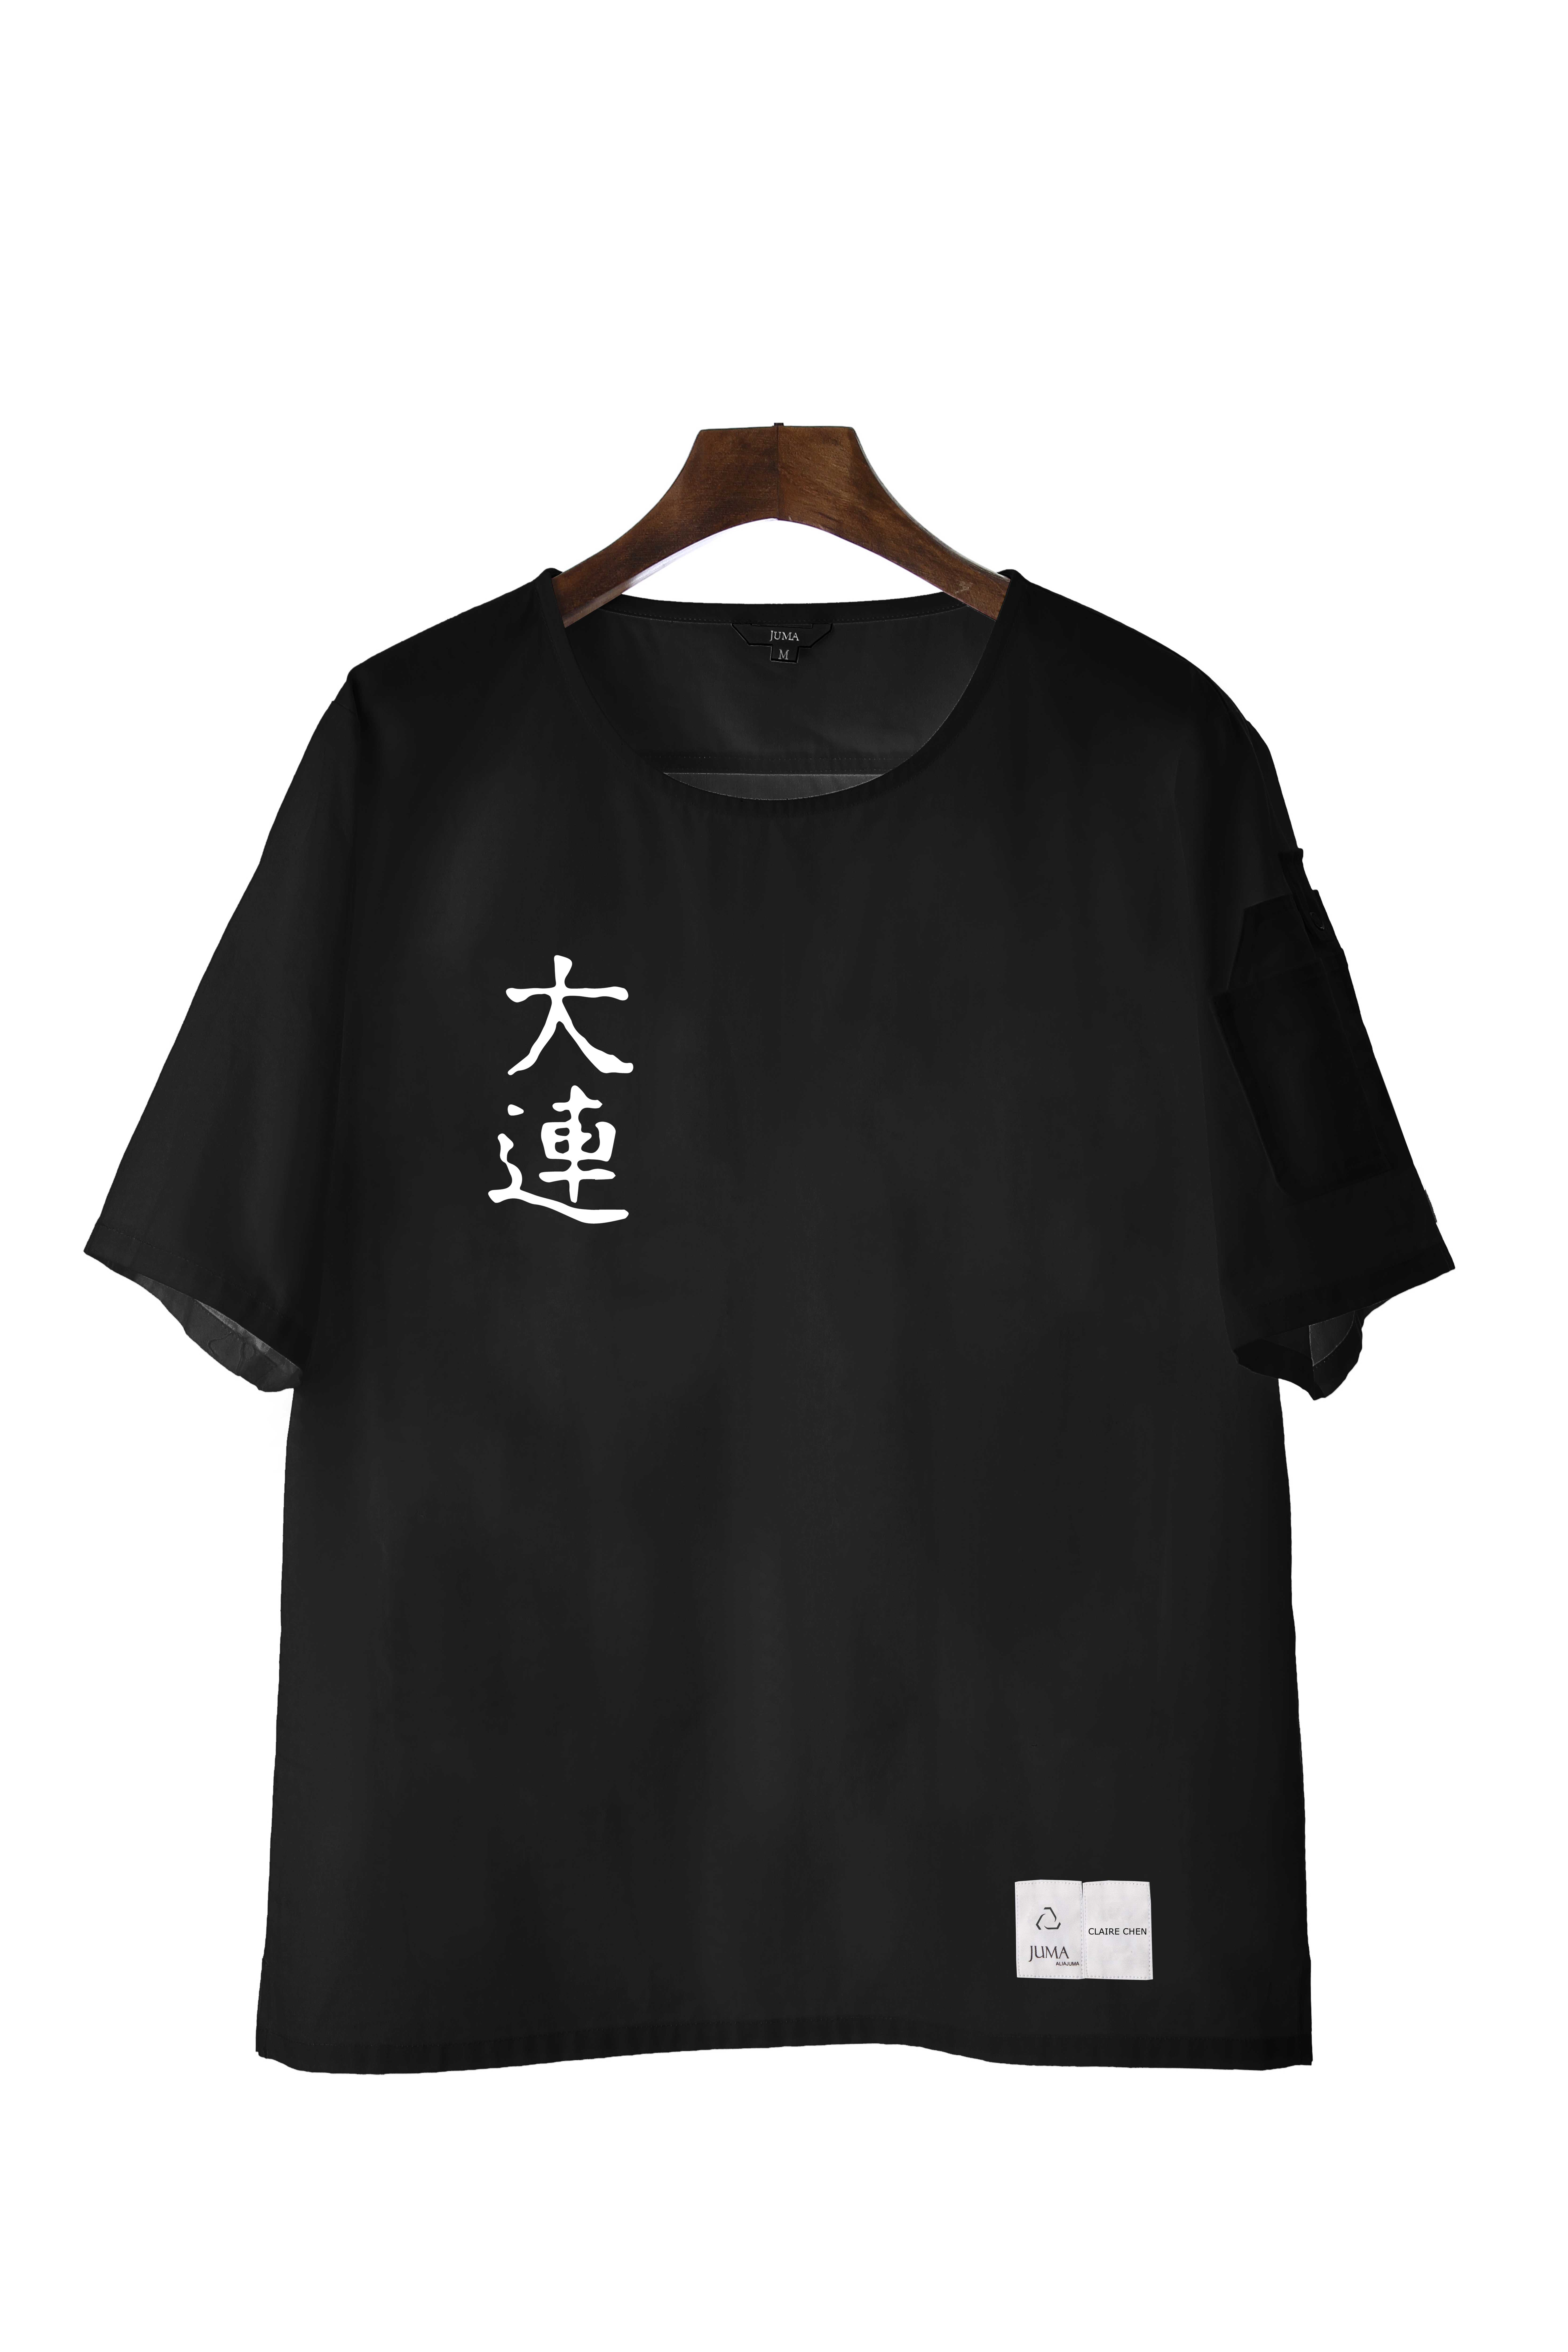 Marine Peacefulness 短袖衬衫 - 4 个再生水瓶 - 黑色｜Marine Peacefulness Short Sleeve Shirt - 4 Recycled Water Bottles - Black